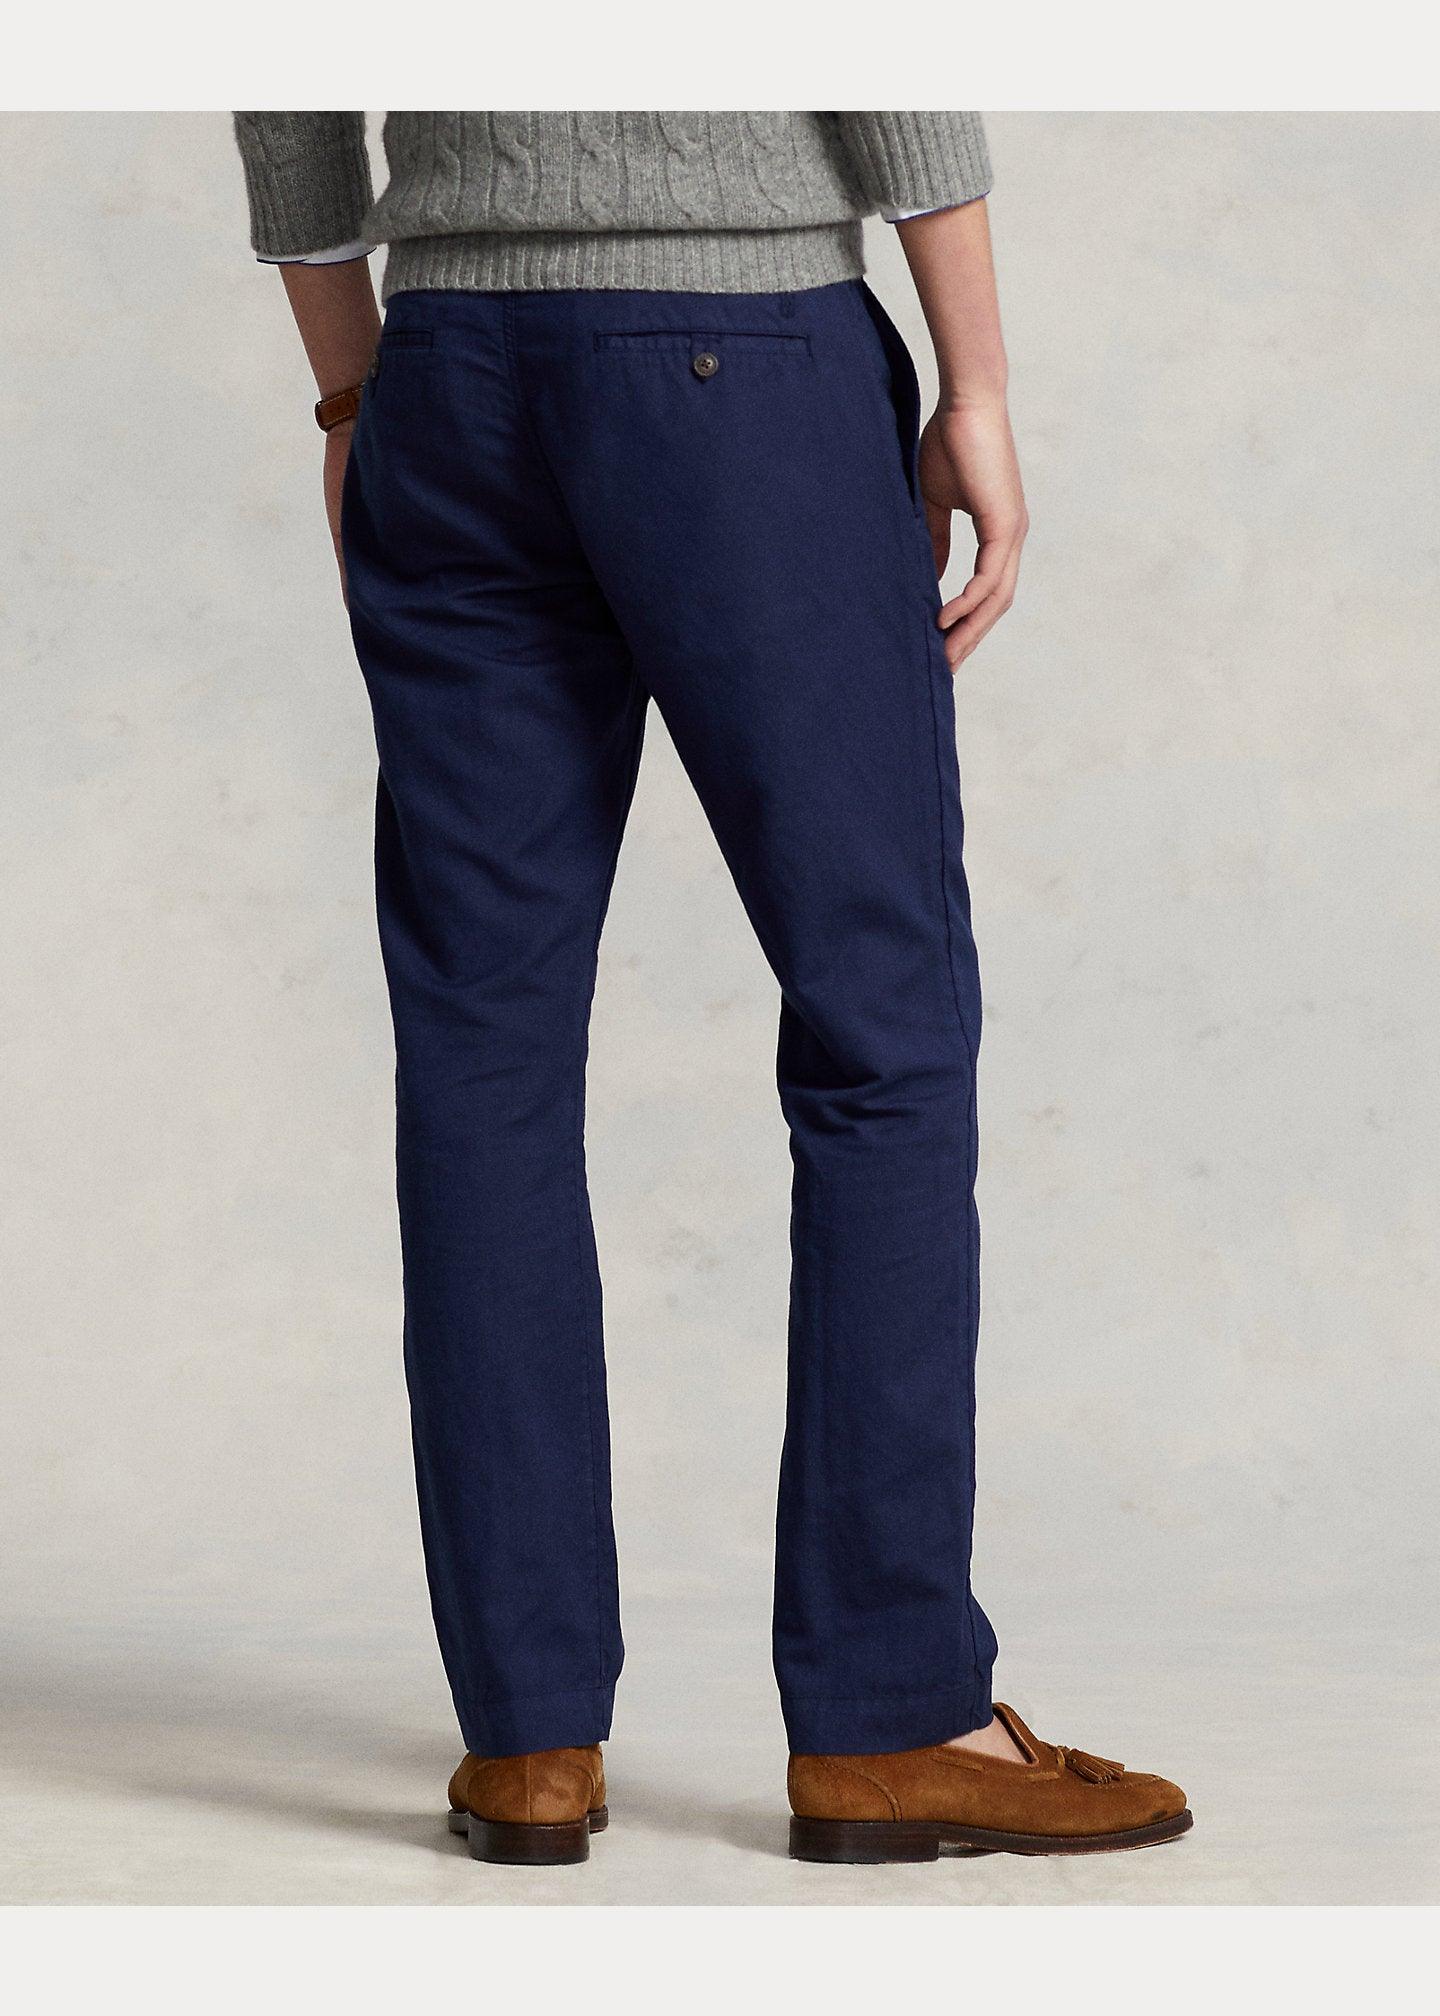 Pantalon Lino Polo Ralph Lauren Slim fit - tiendadicons.com